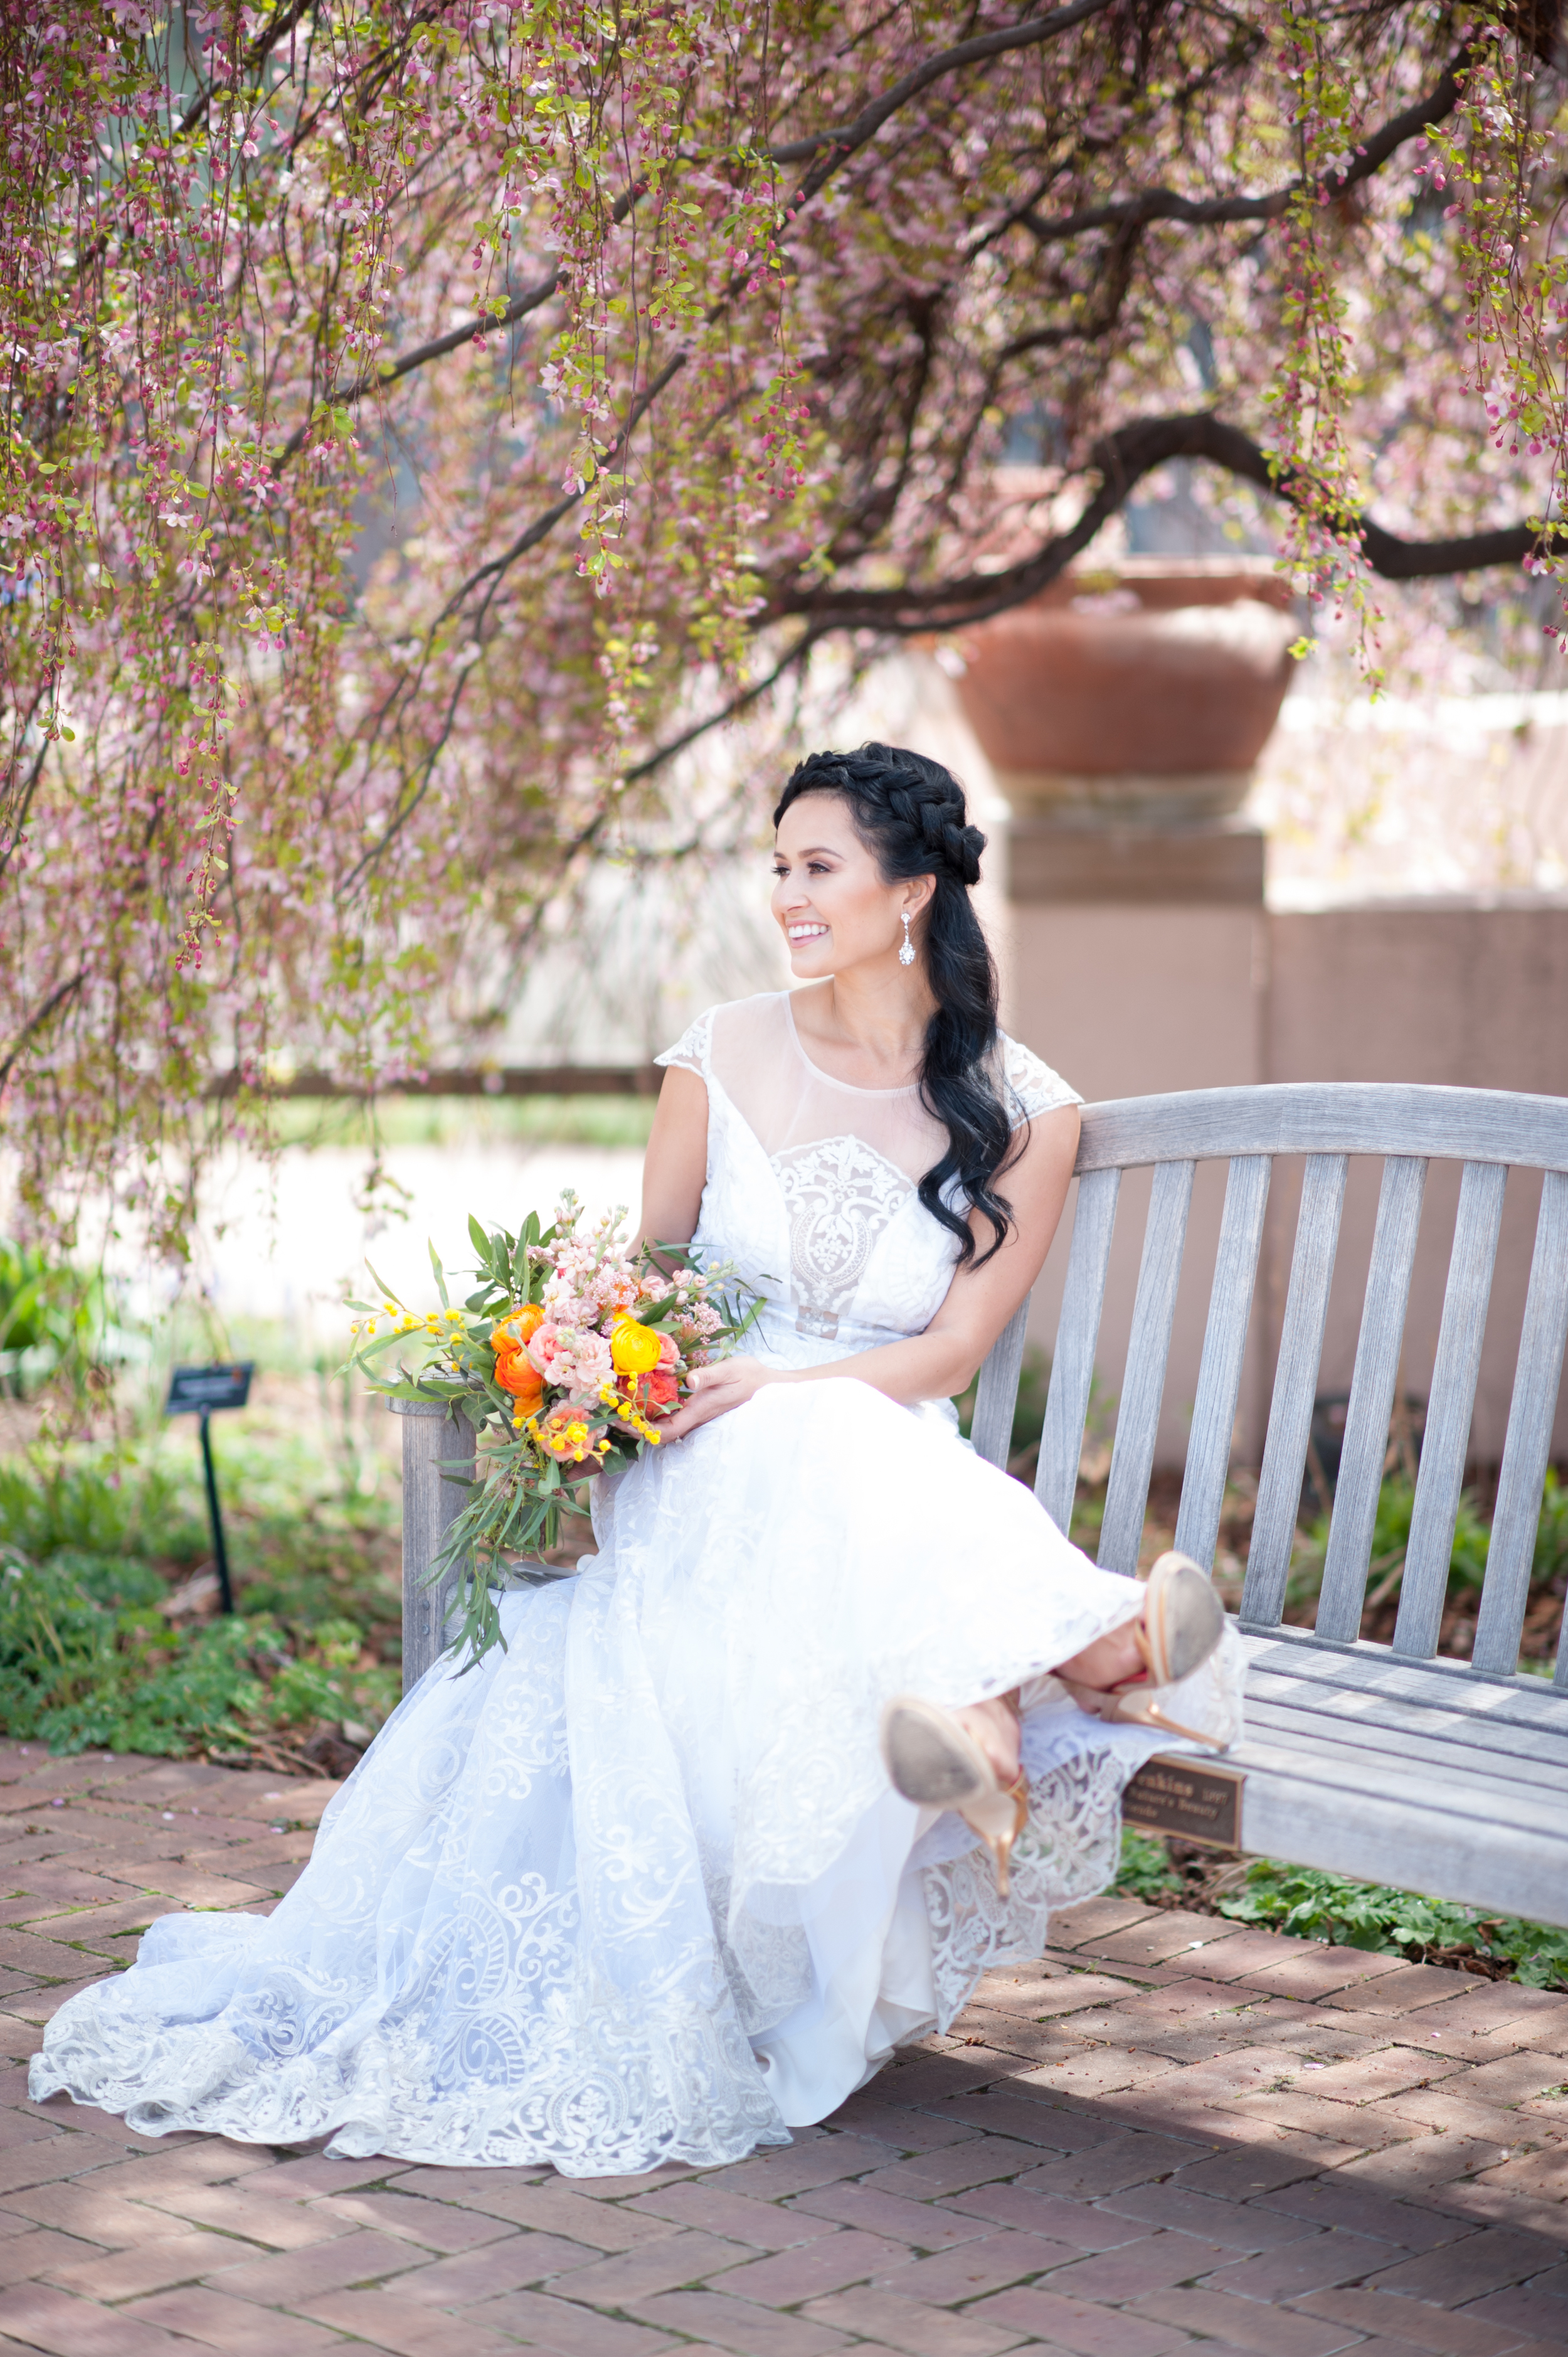  Spring inspired shoot at Botanic Gardens Denver | "Vanderbilt" from Claire Pettibone available at Little White Dress Bridal Shop |&nbsp; Colby Elizabeth Photography  